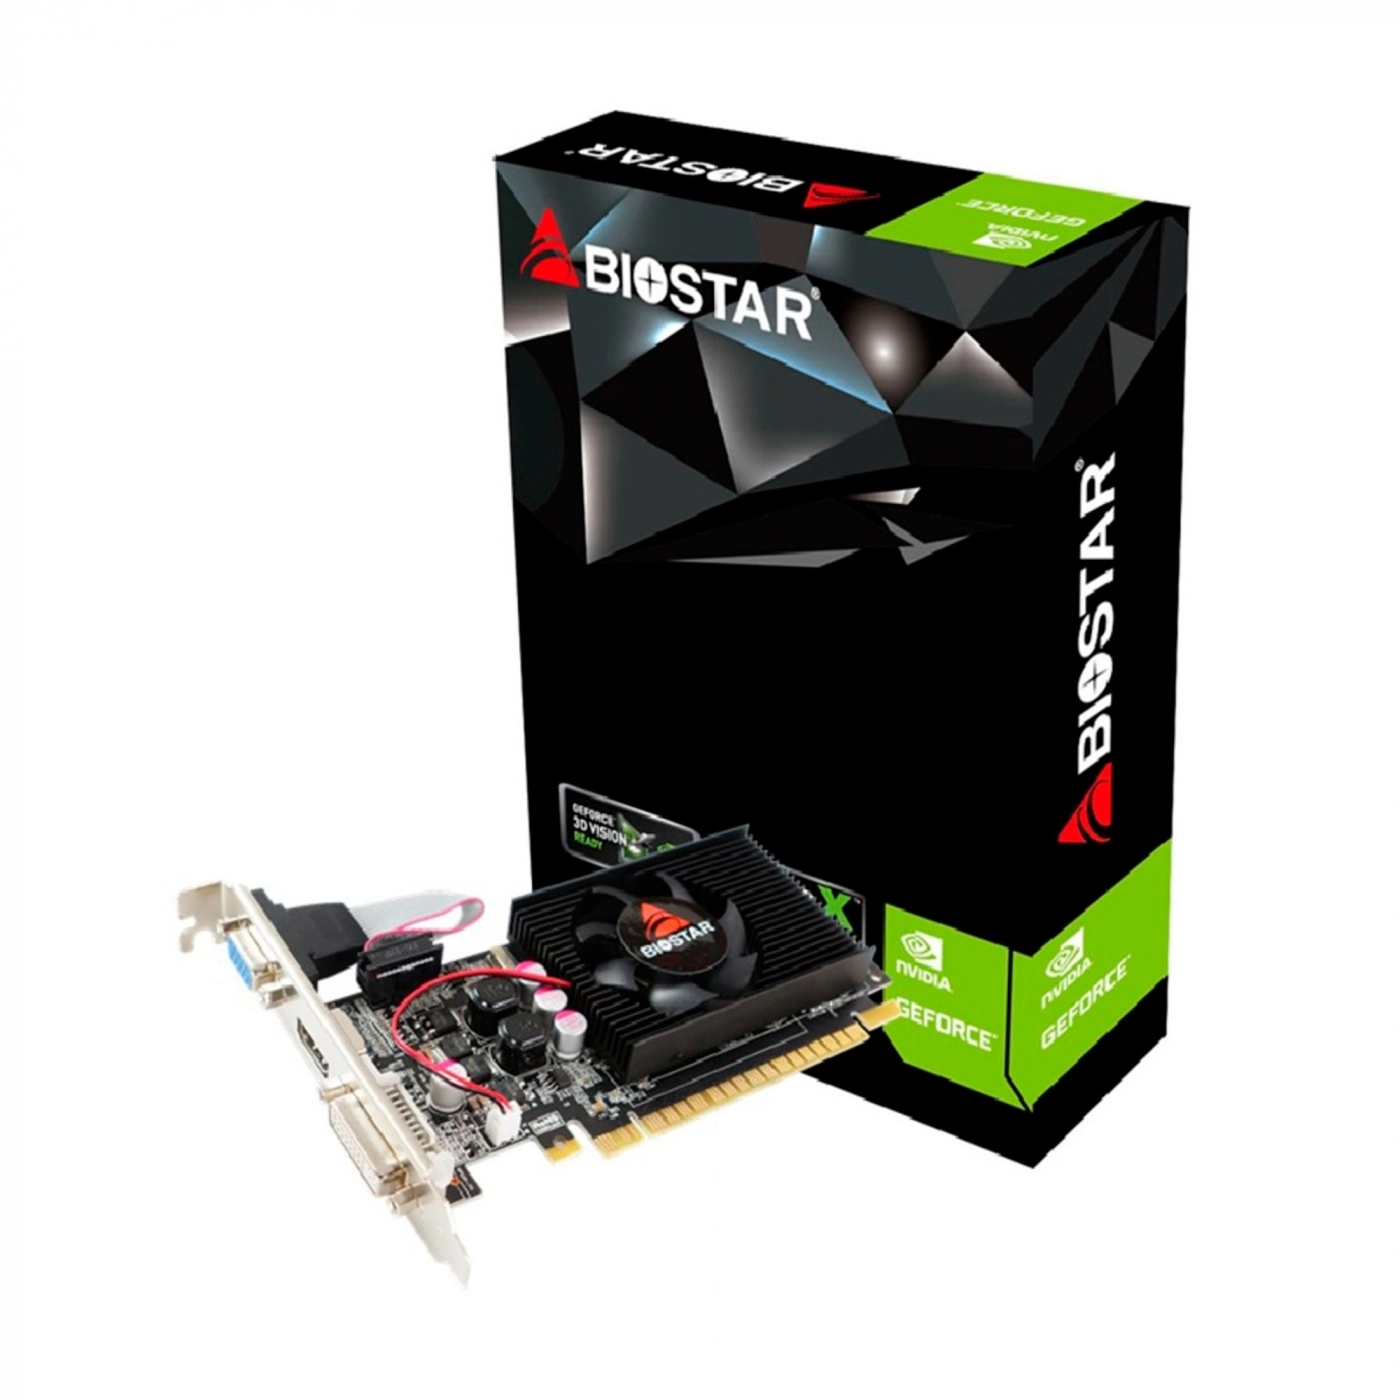 Купить Видеокарта Biostar GeForce G210-1GB D3 LP - фото 1